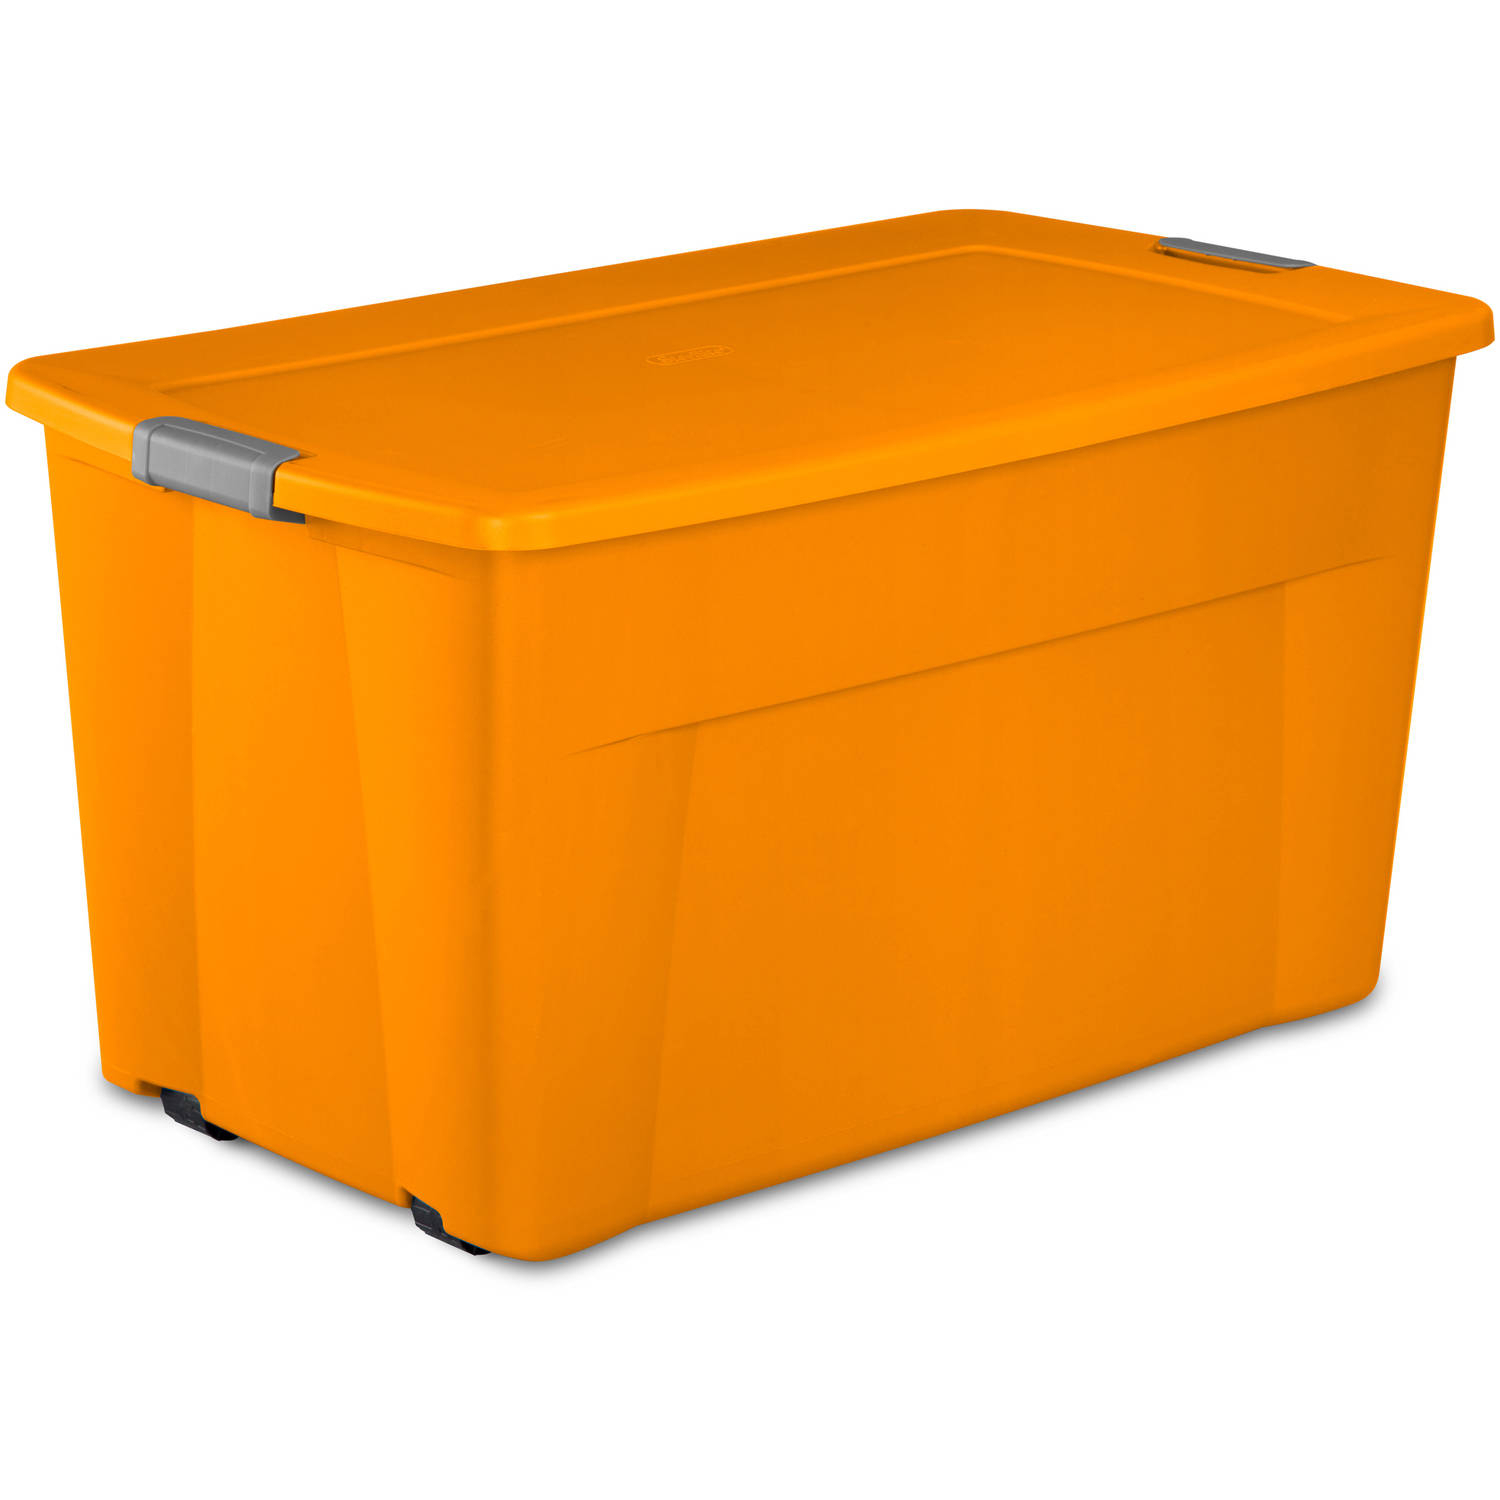 Orange Sterilite Storage Containers Storage Ideas in size 1500 X 1500